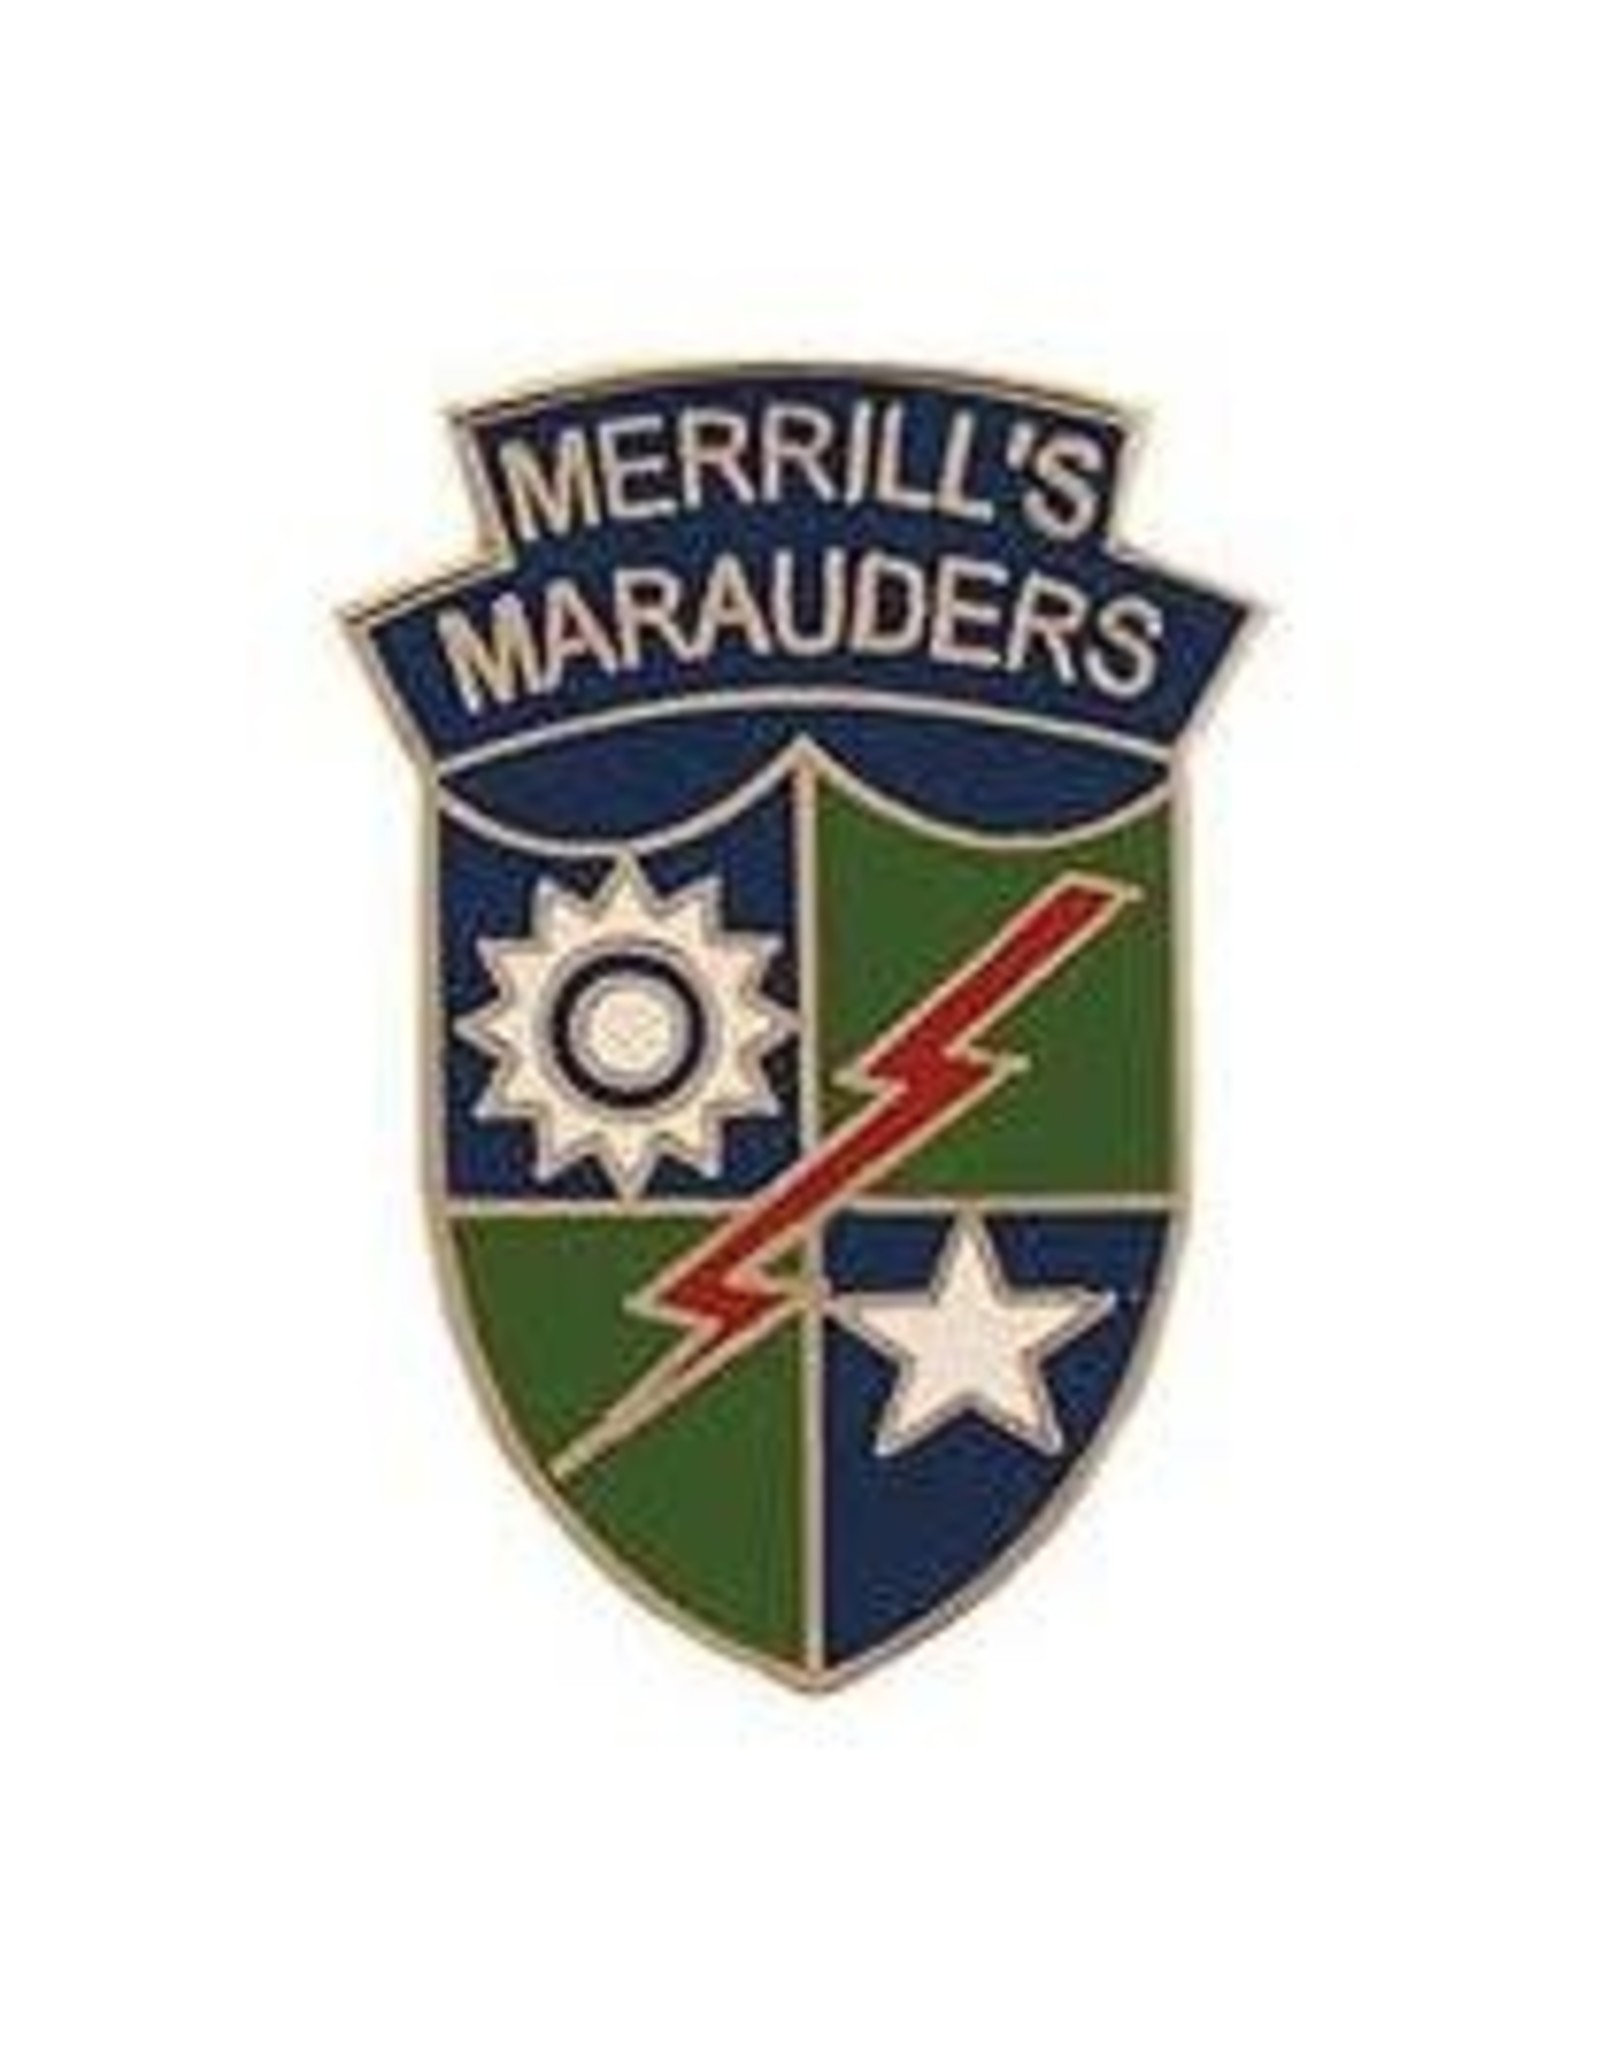 Pin - Army Merrill's Mrauders 5307th Rgt